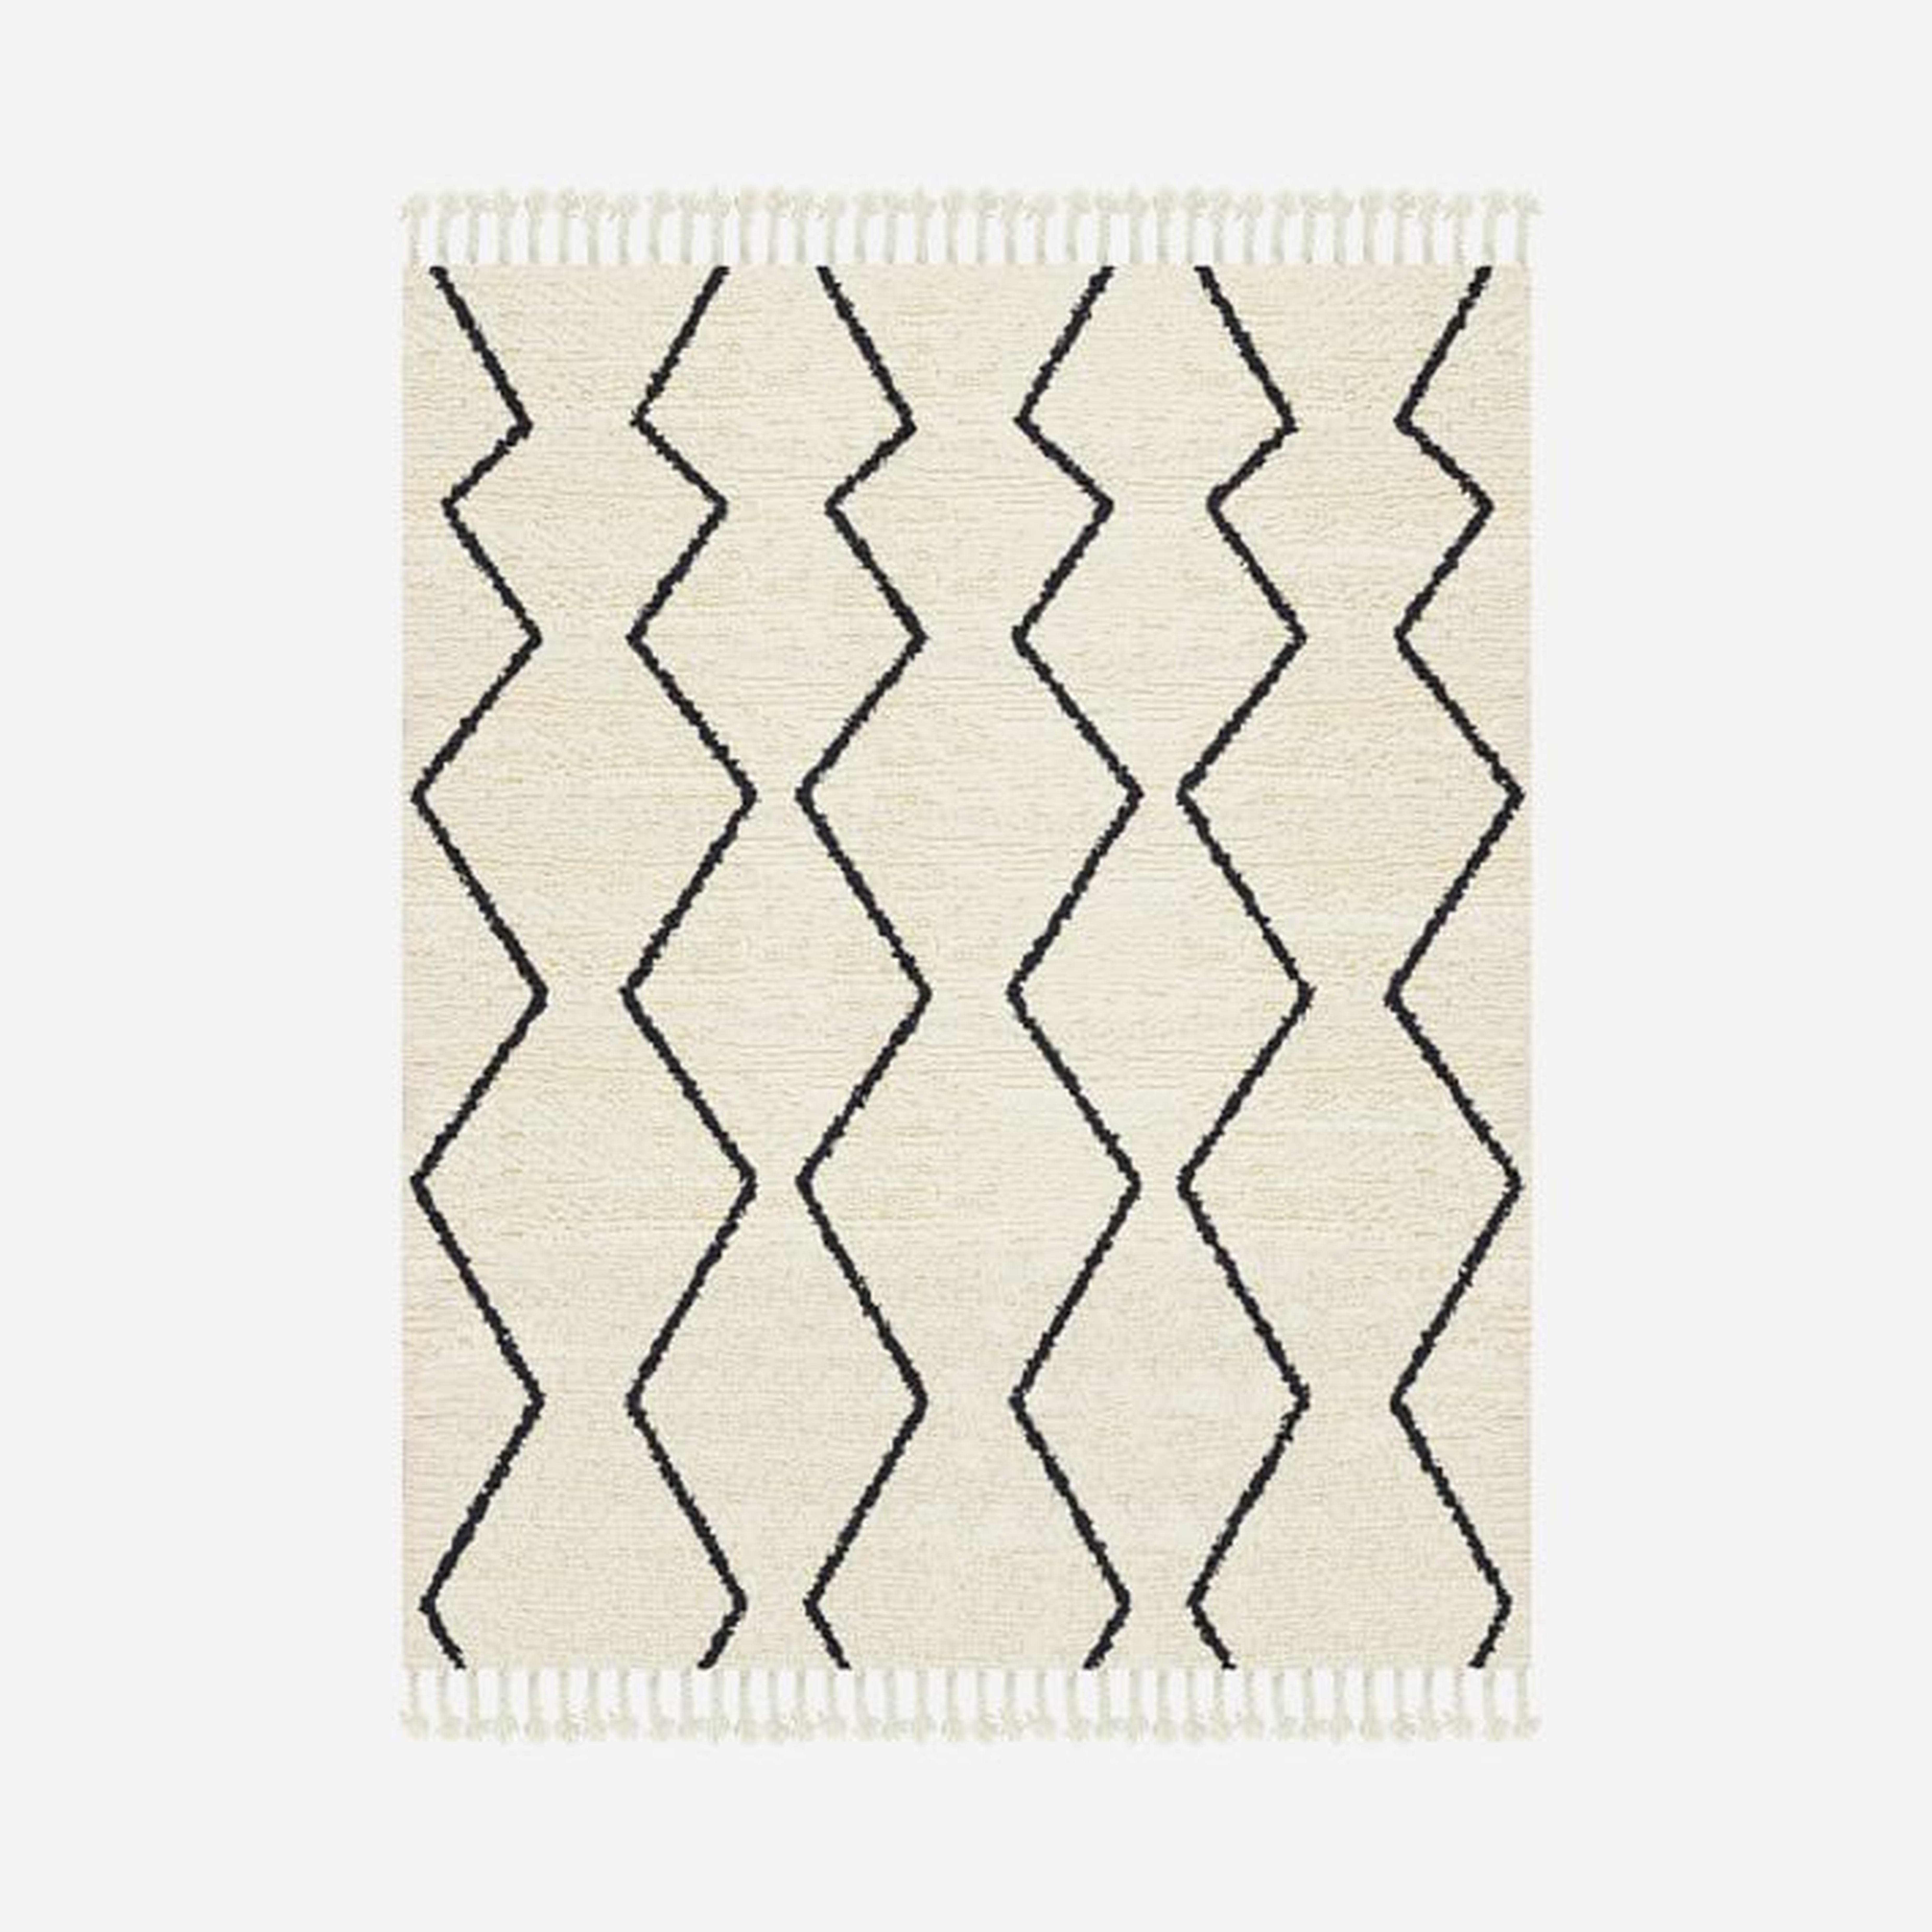 Souk Wool Rug - Graphite 8'x10' - West Elm